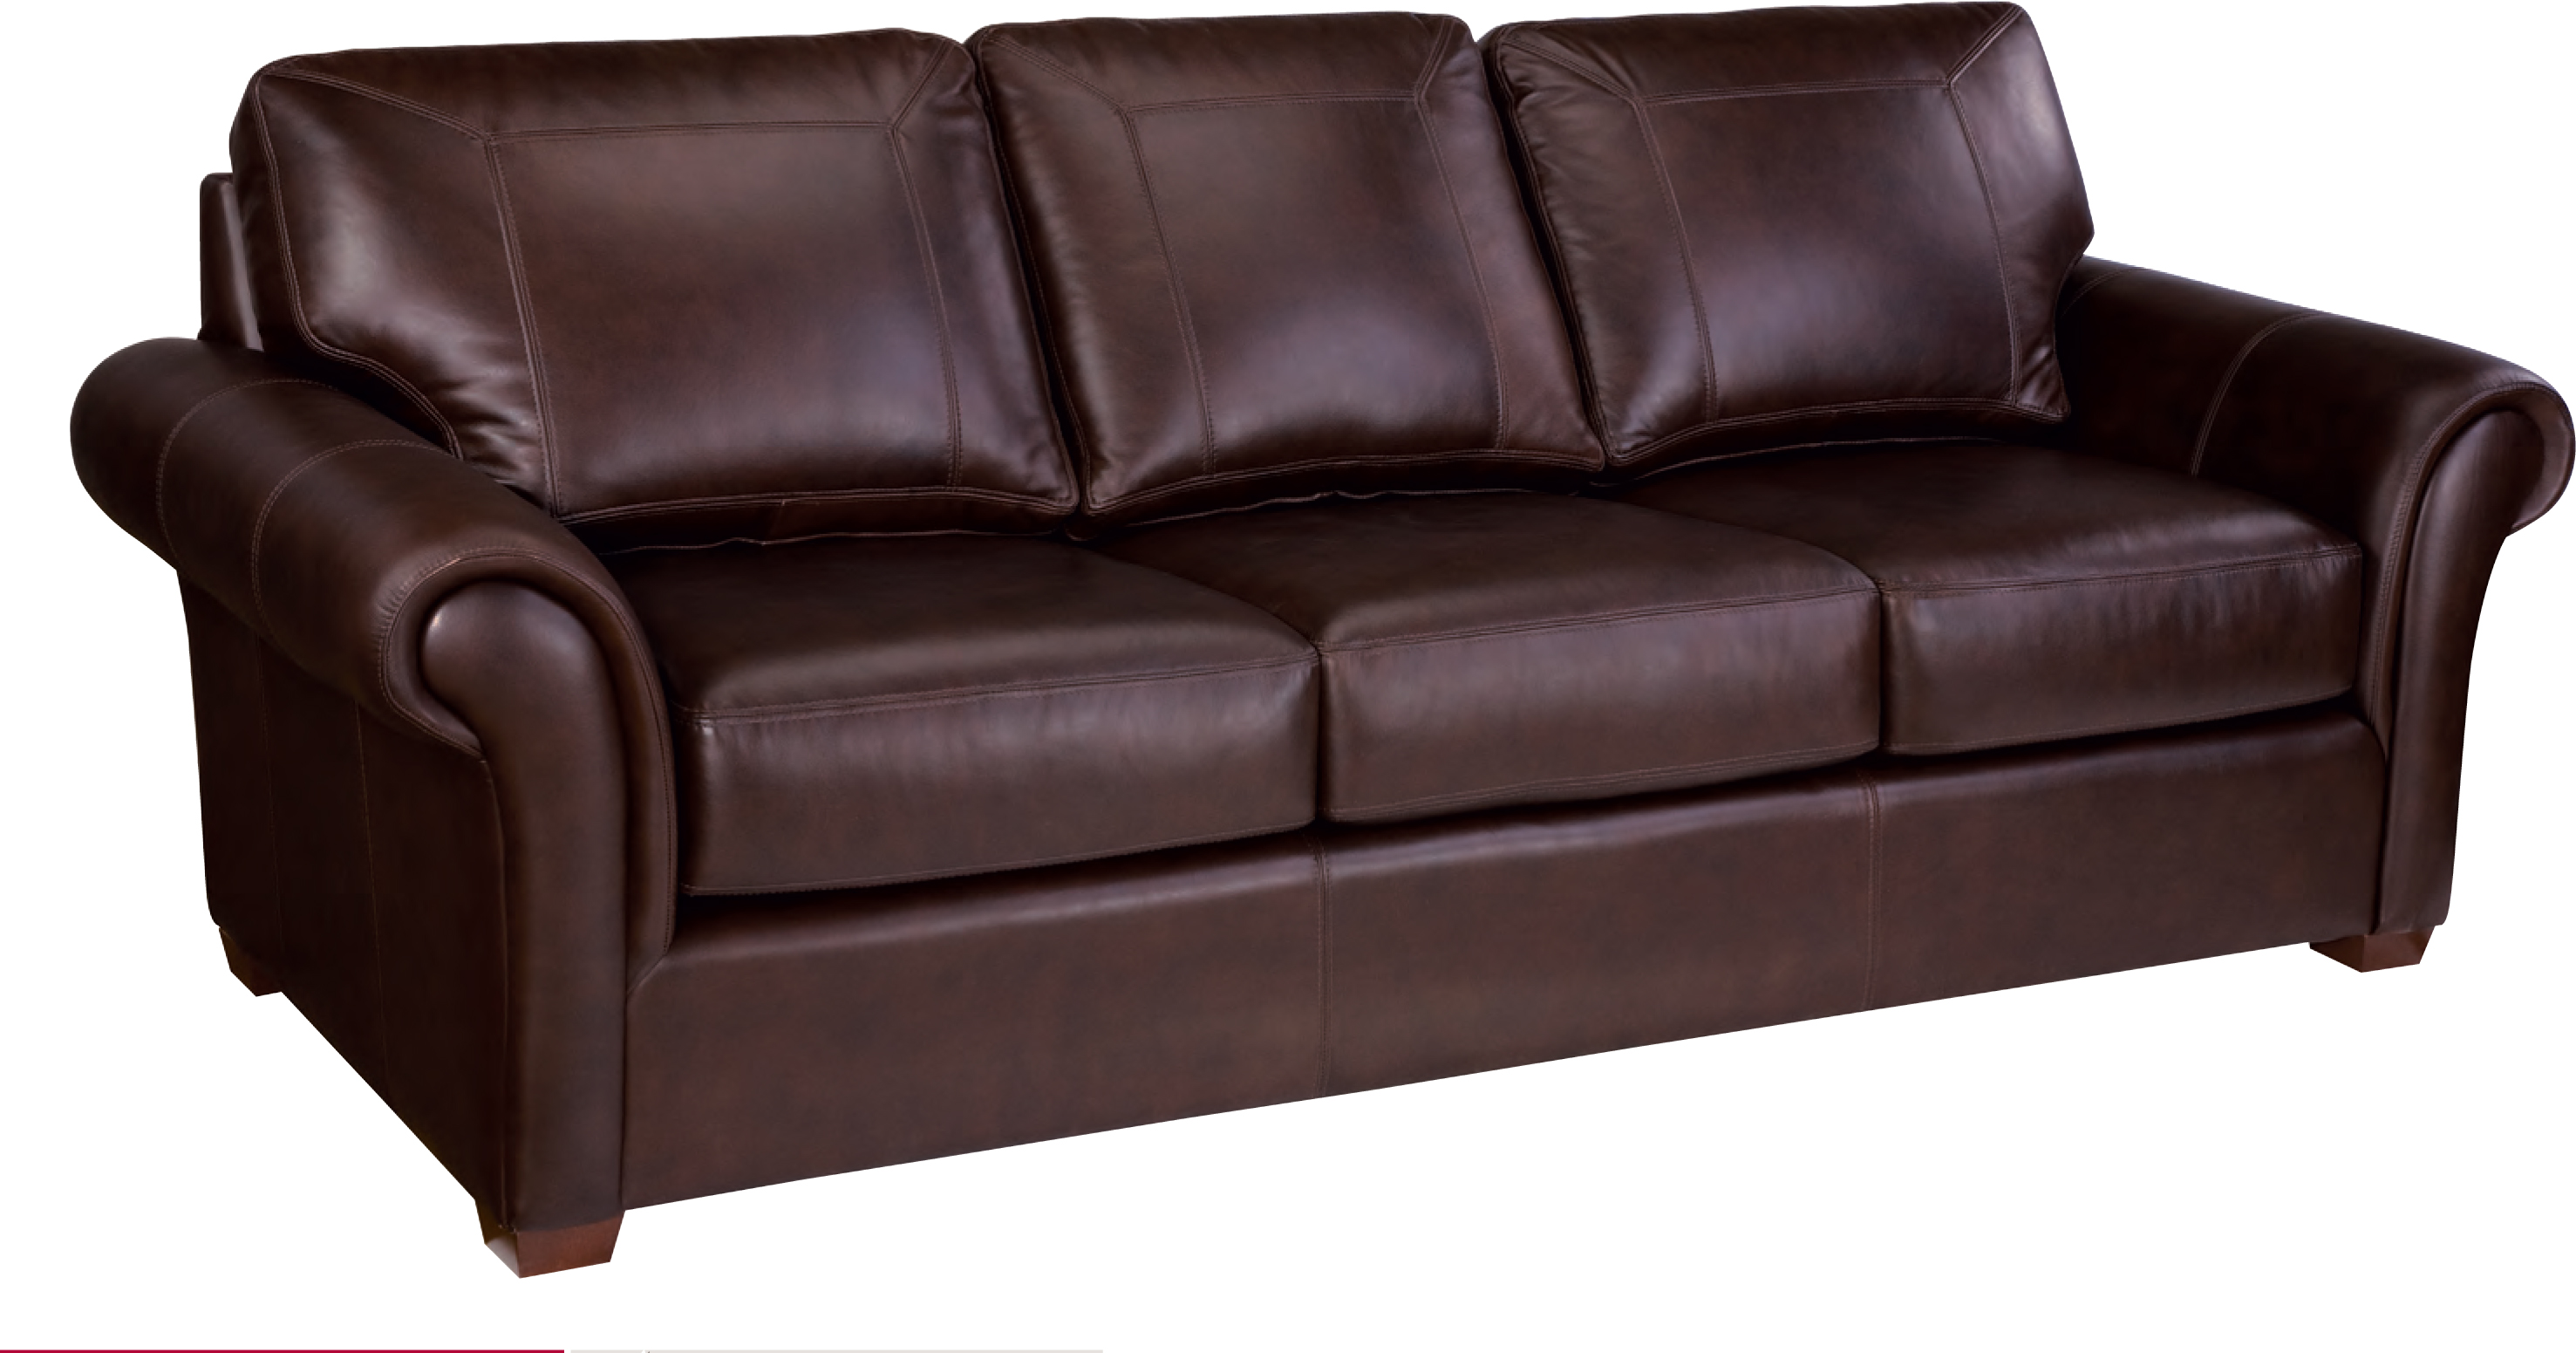 leathercraft garland leather sofa